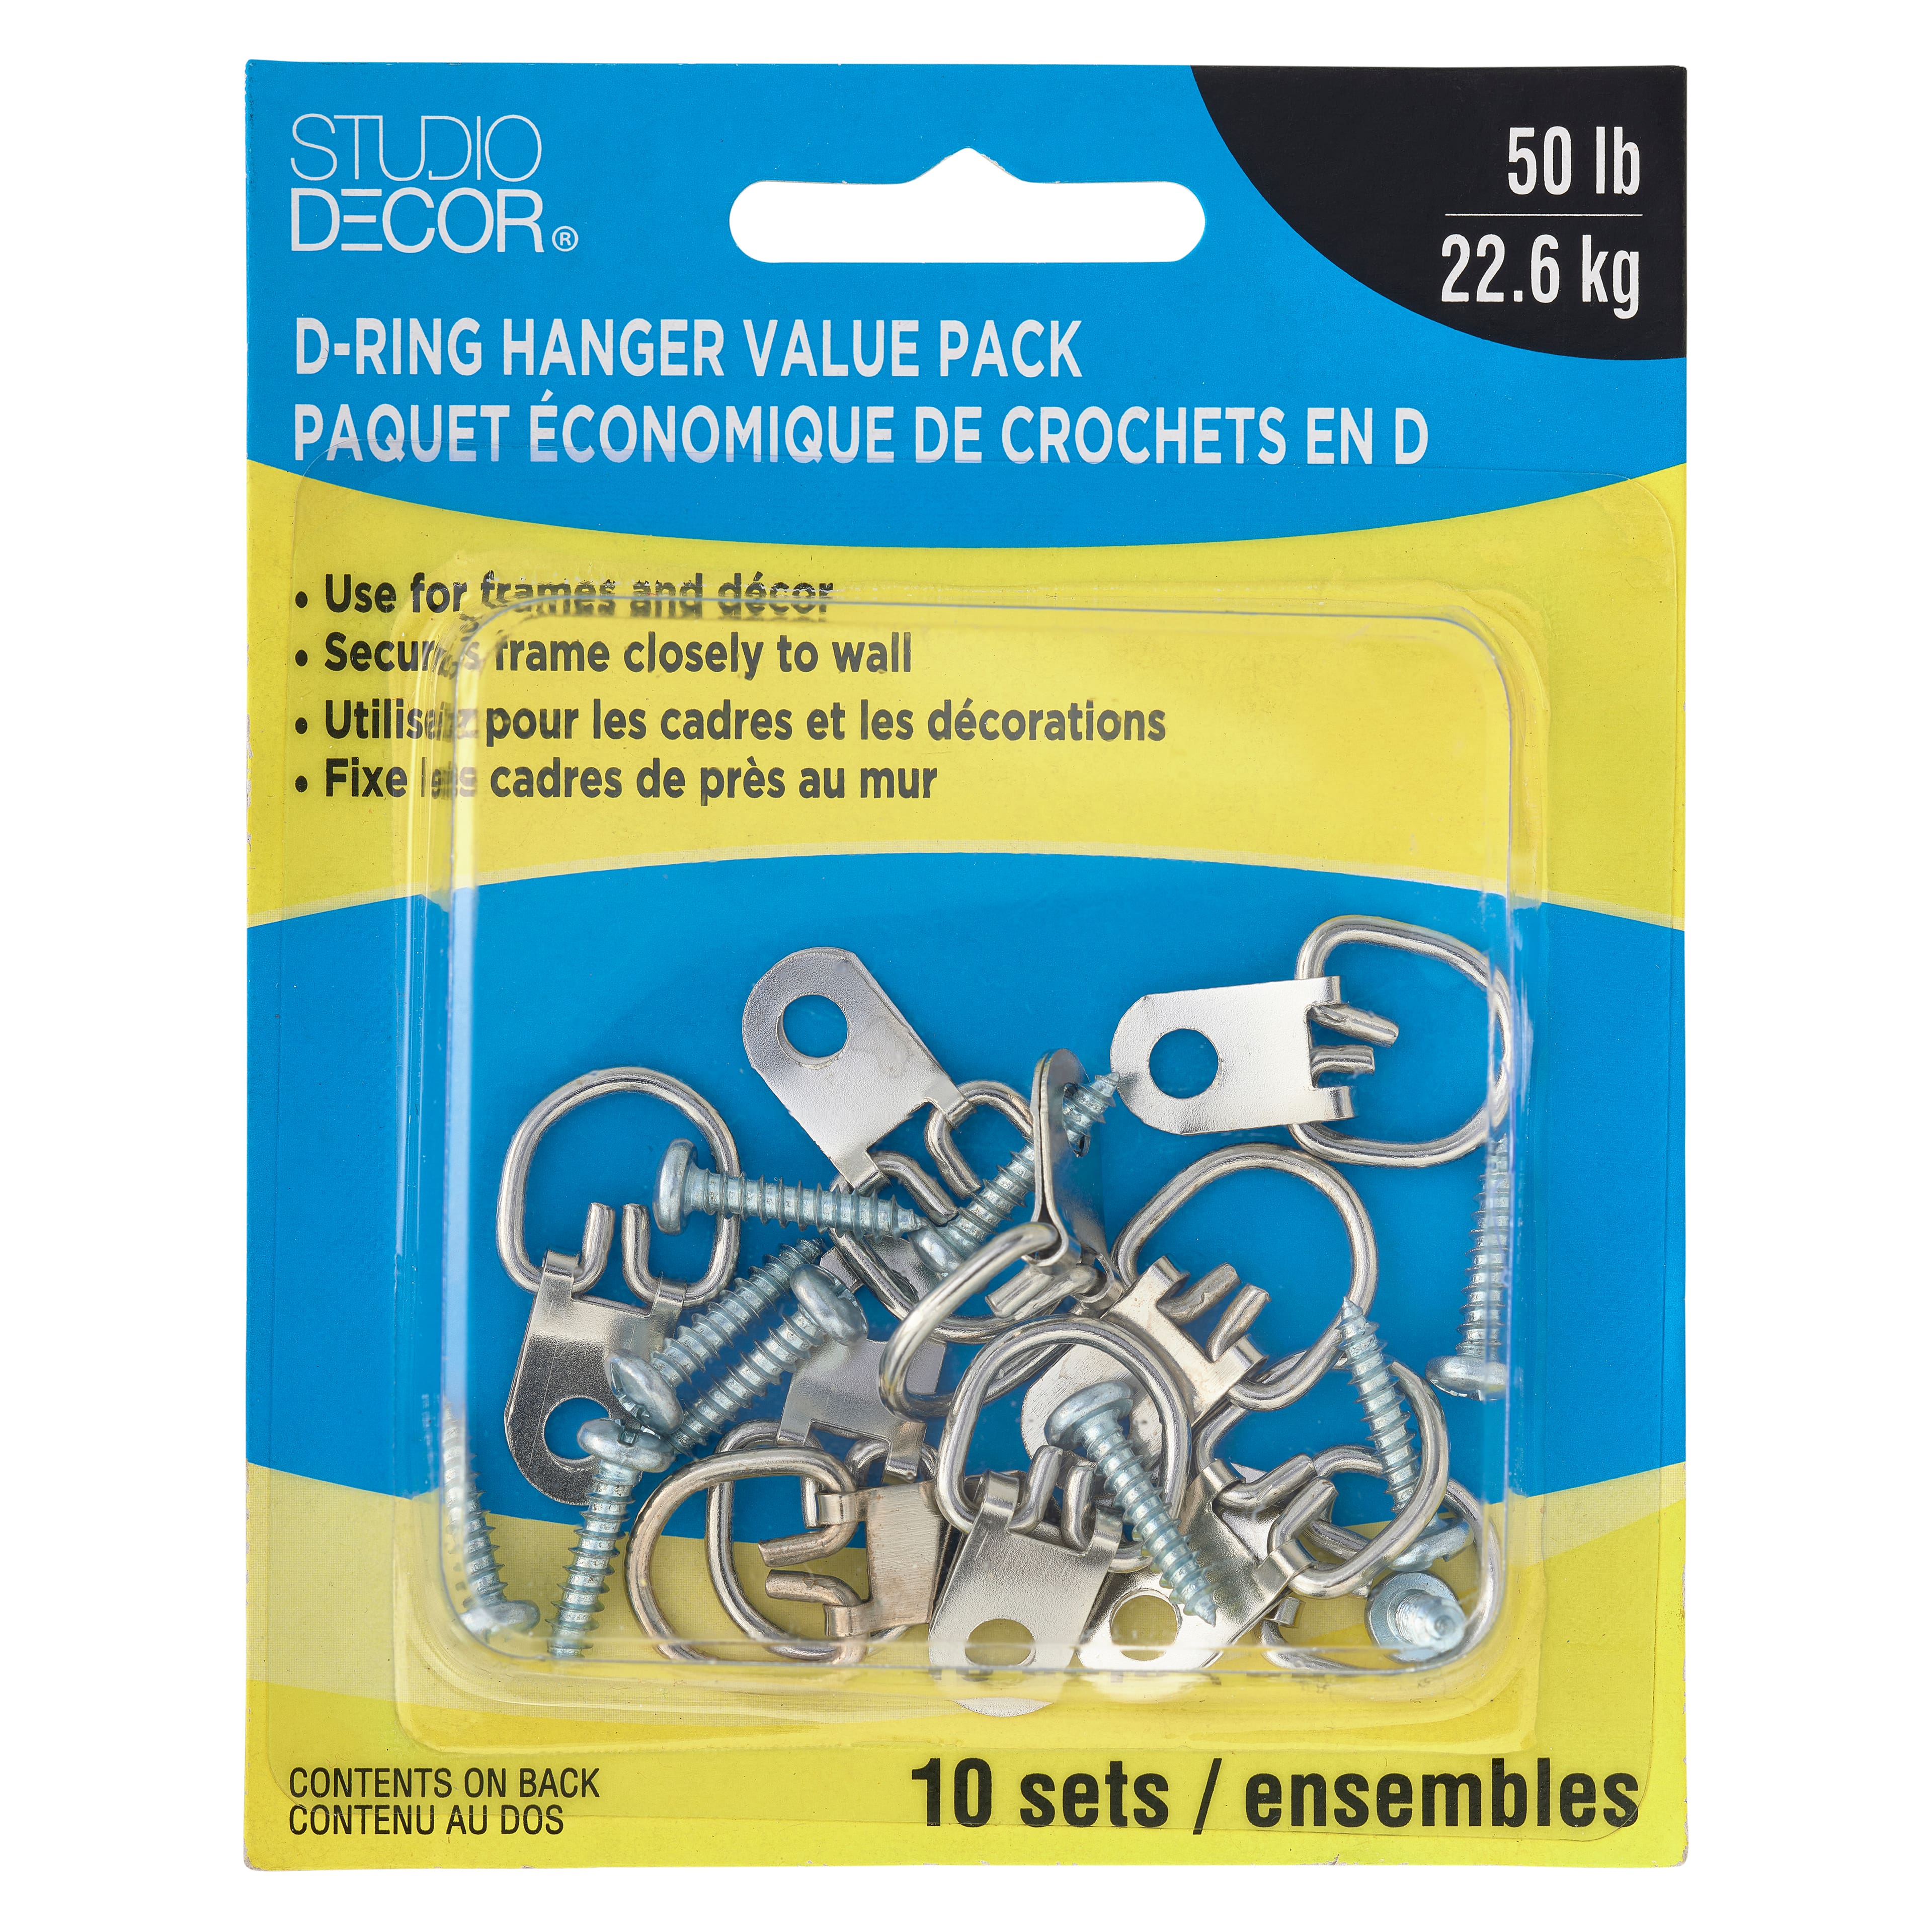 D-Ring Hanger Value Pack by Studio Décor®